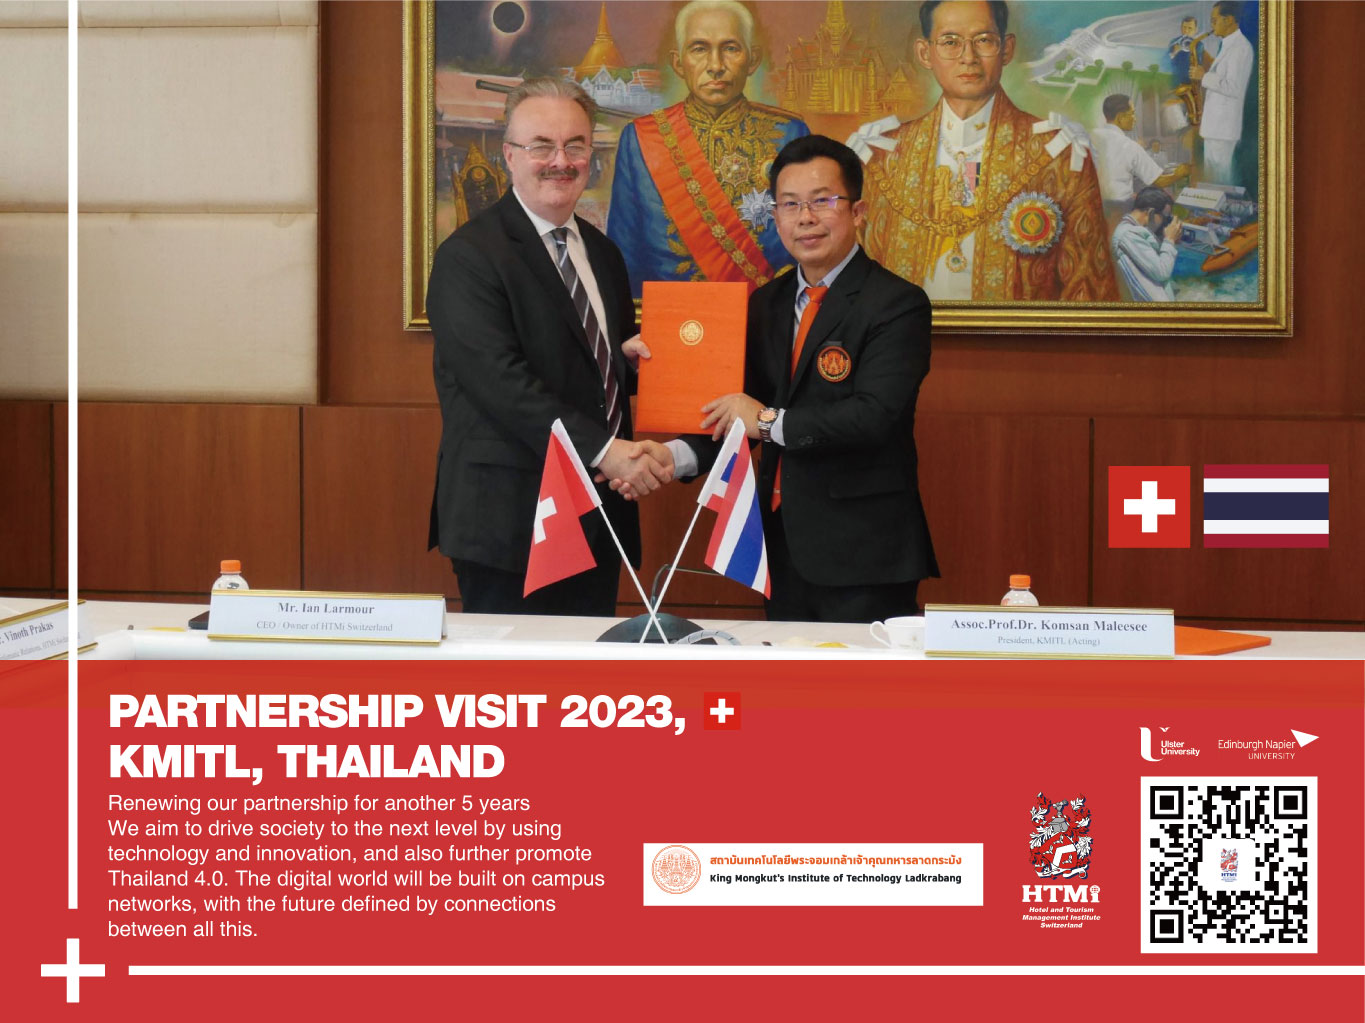 Partnership Visit 2023 - KMITL Thailand